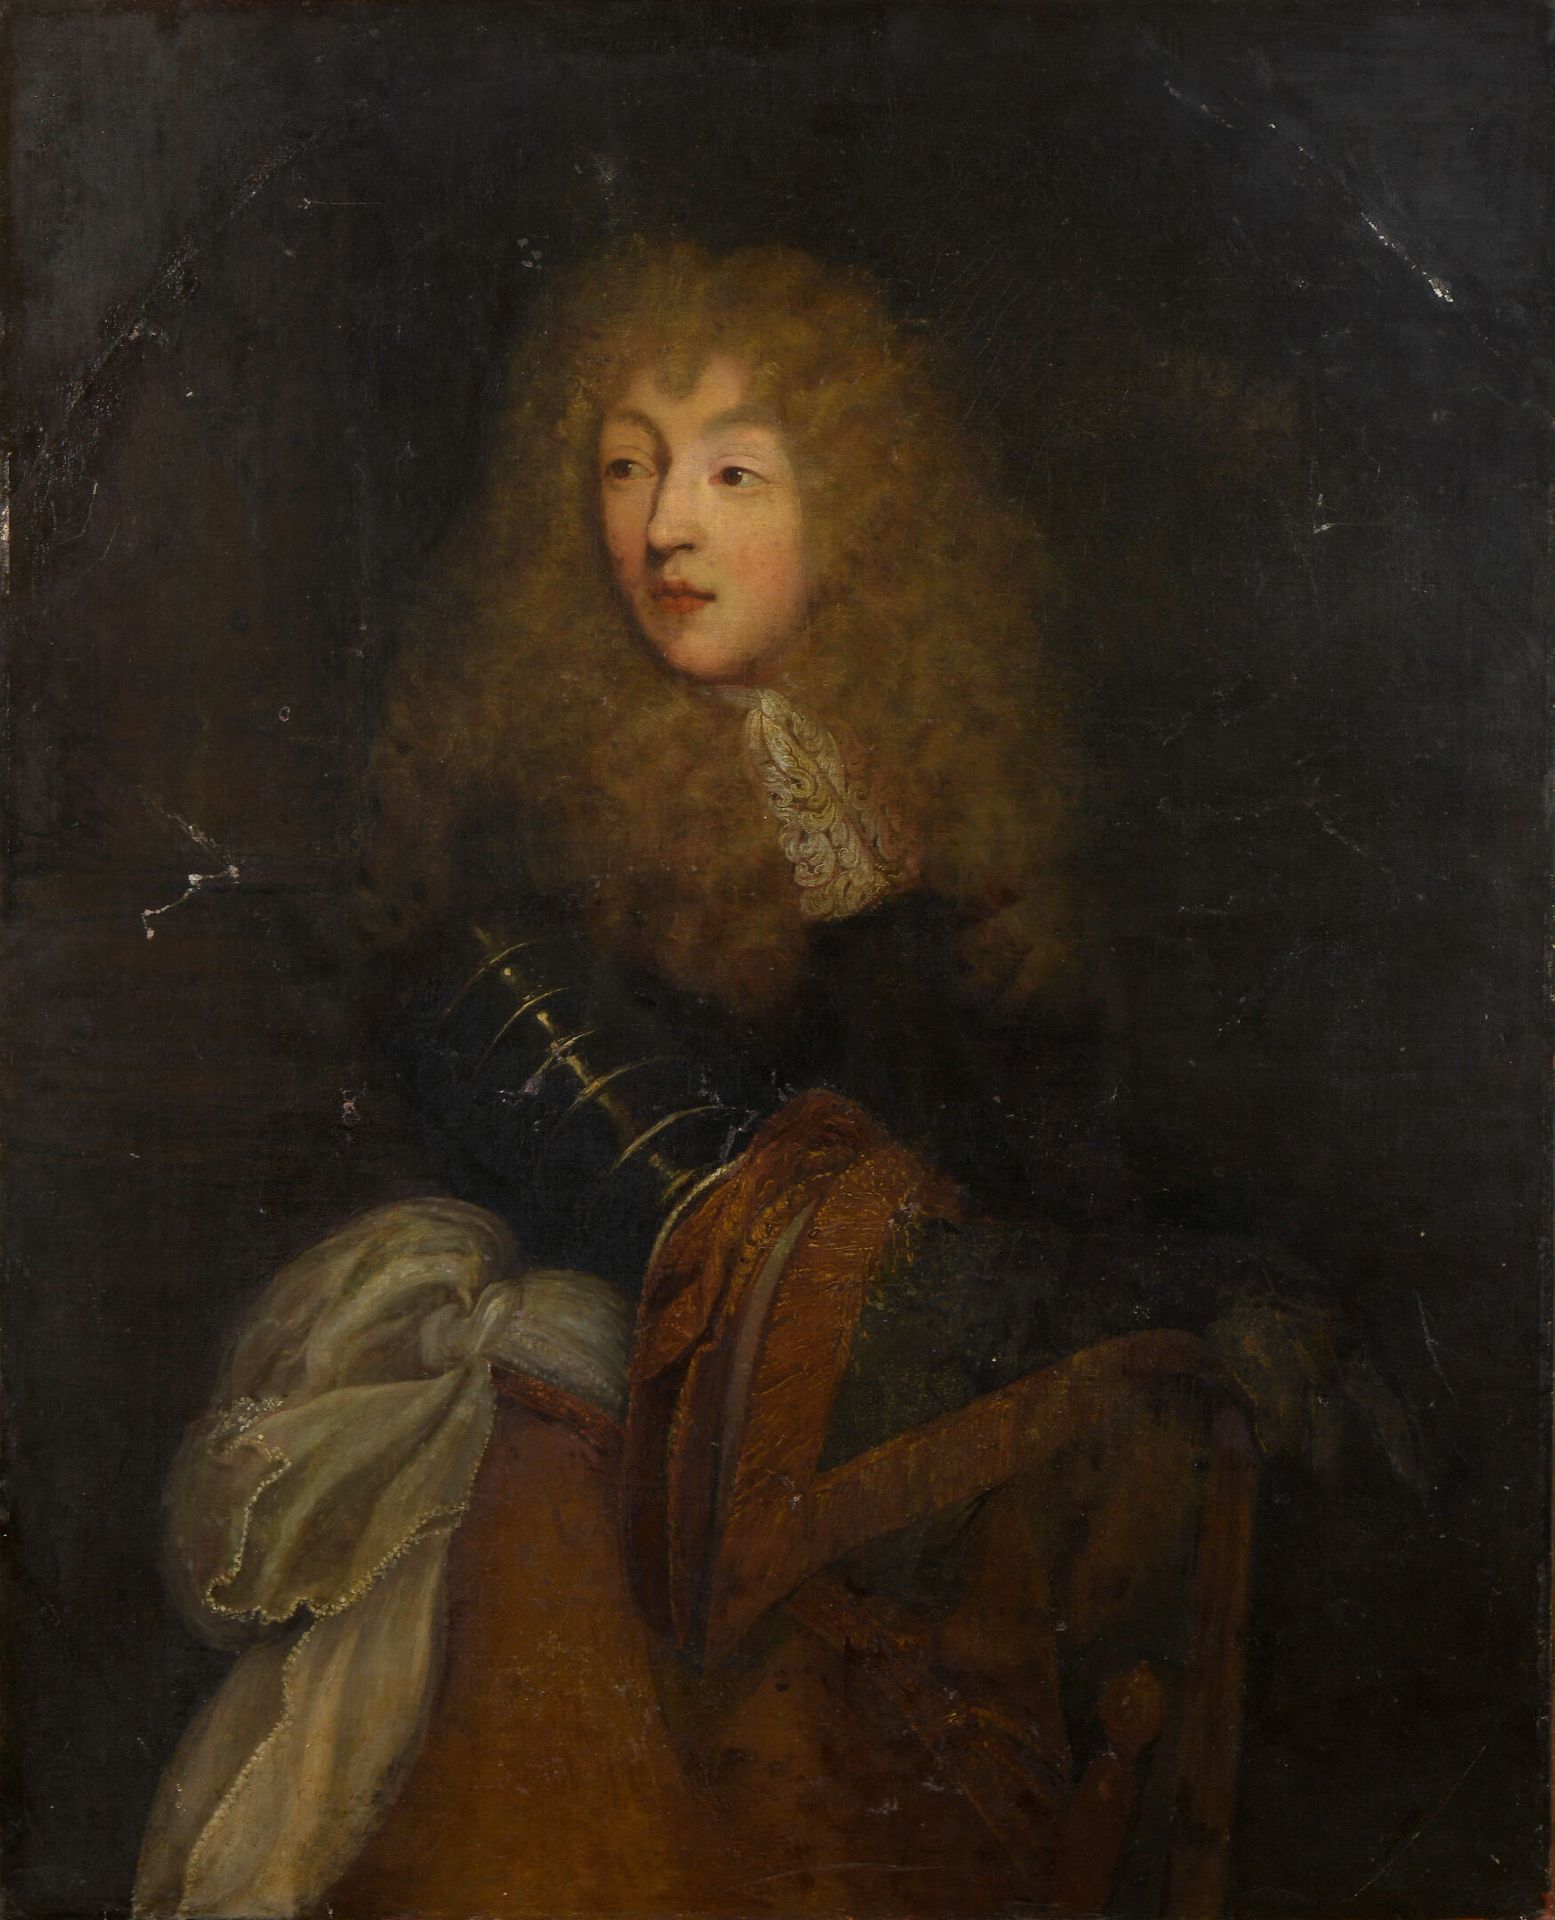 Null 法国画派，约 1670 年
身着盔甲的血族王子肖像 
椭圆形画布镶嵌在长方形中 
H.105.5 厘米 - 85 厘米 ET
旧修复